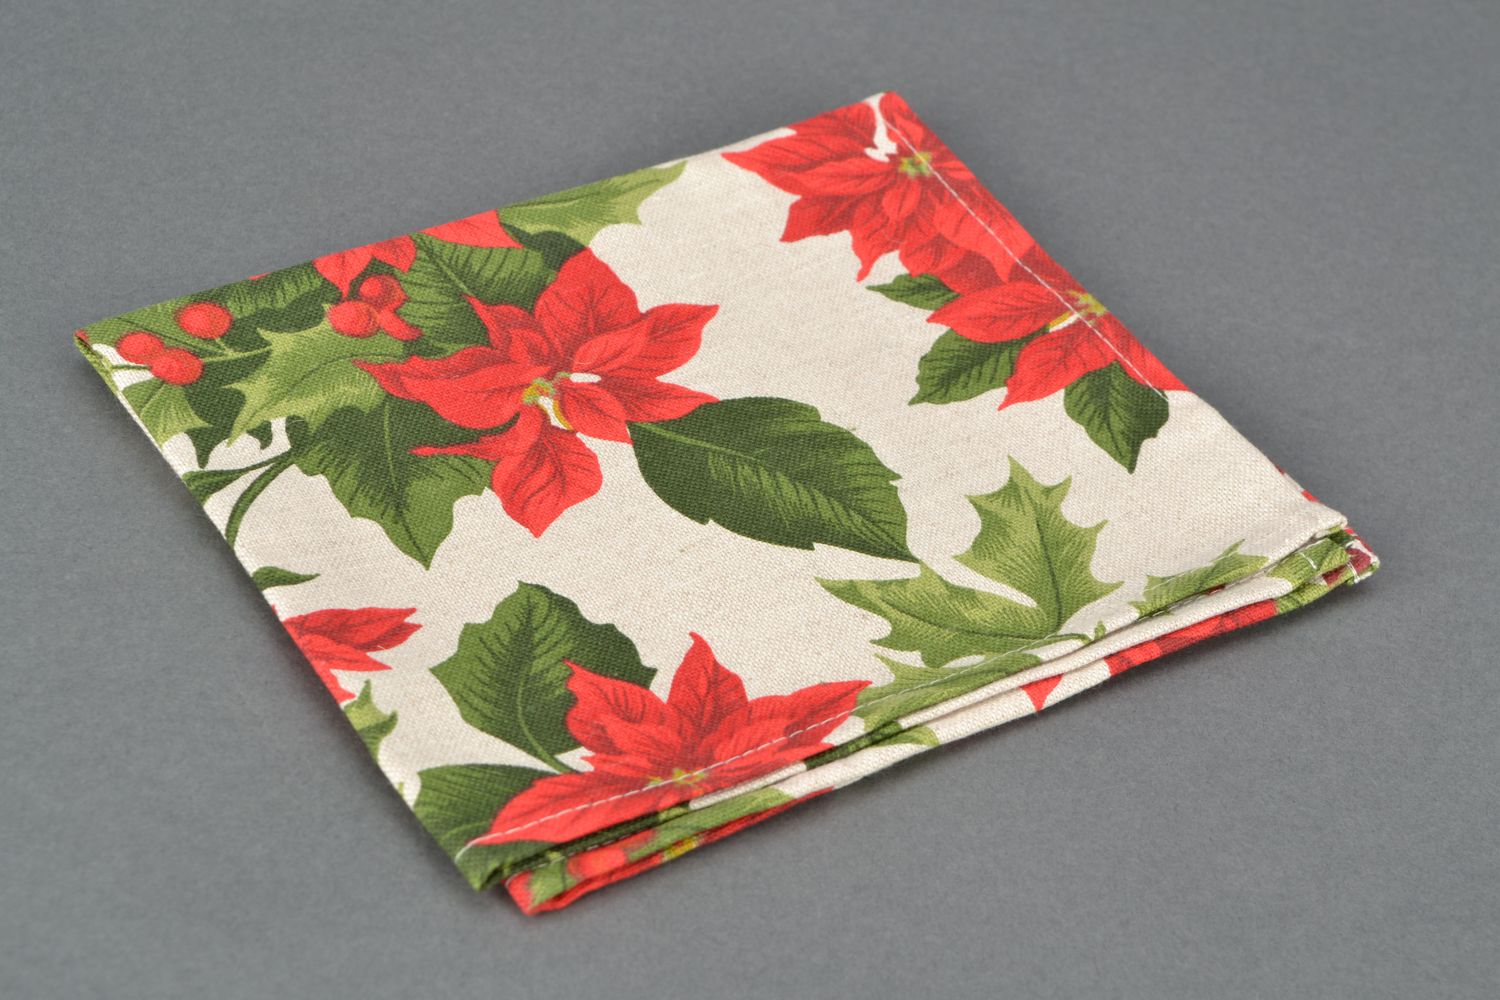 Decorative Christmas fabric napkin photo 3